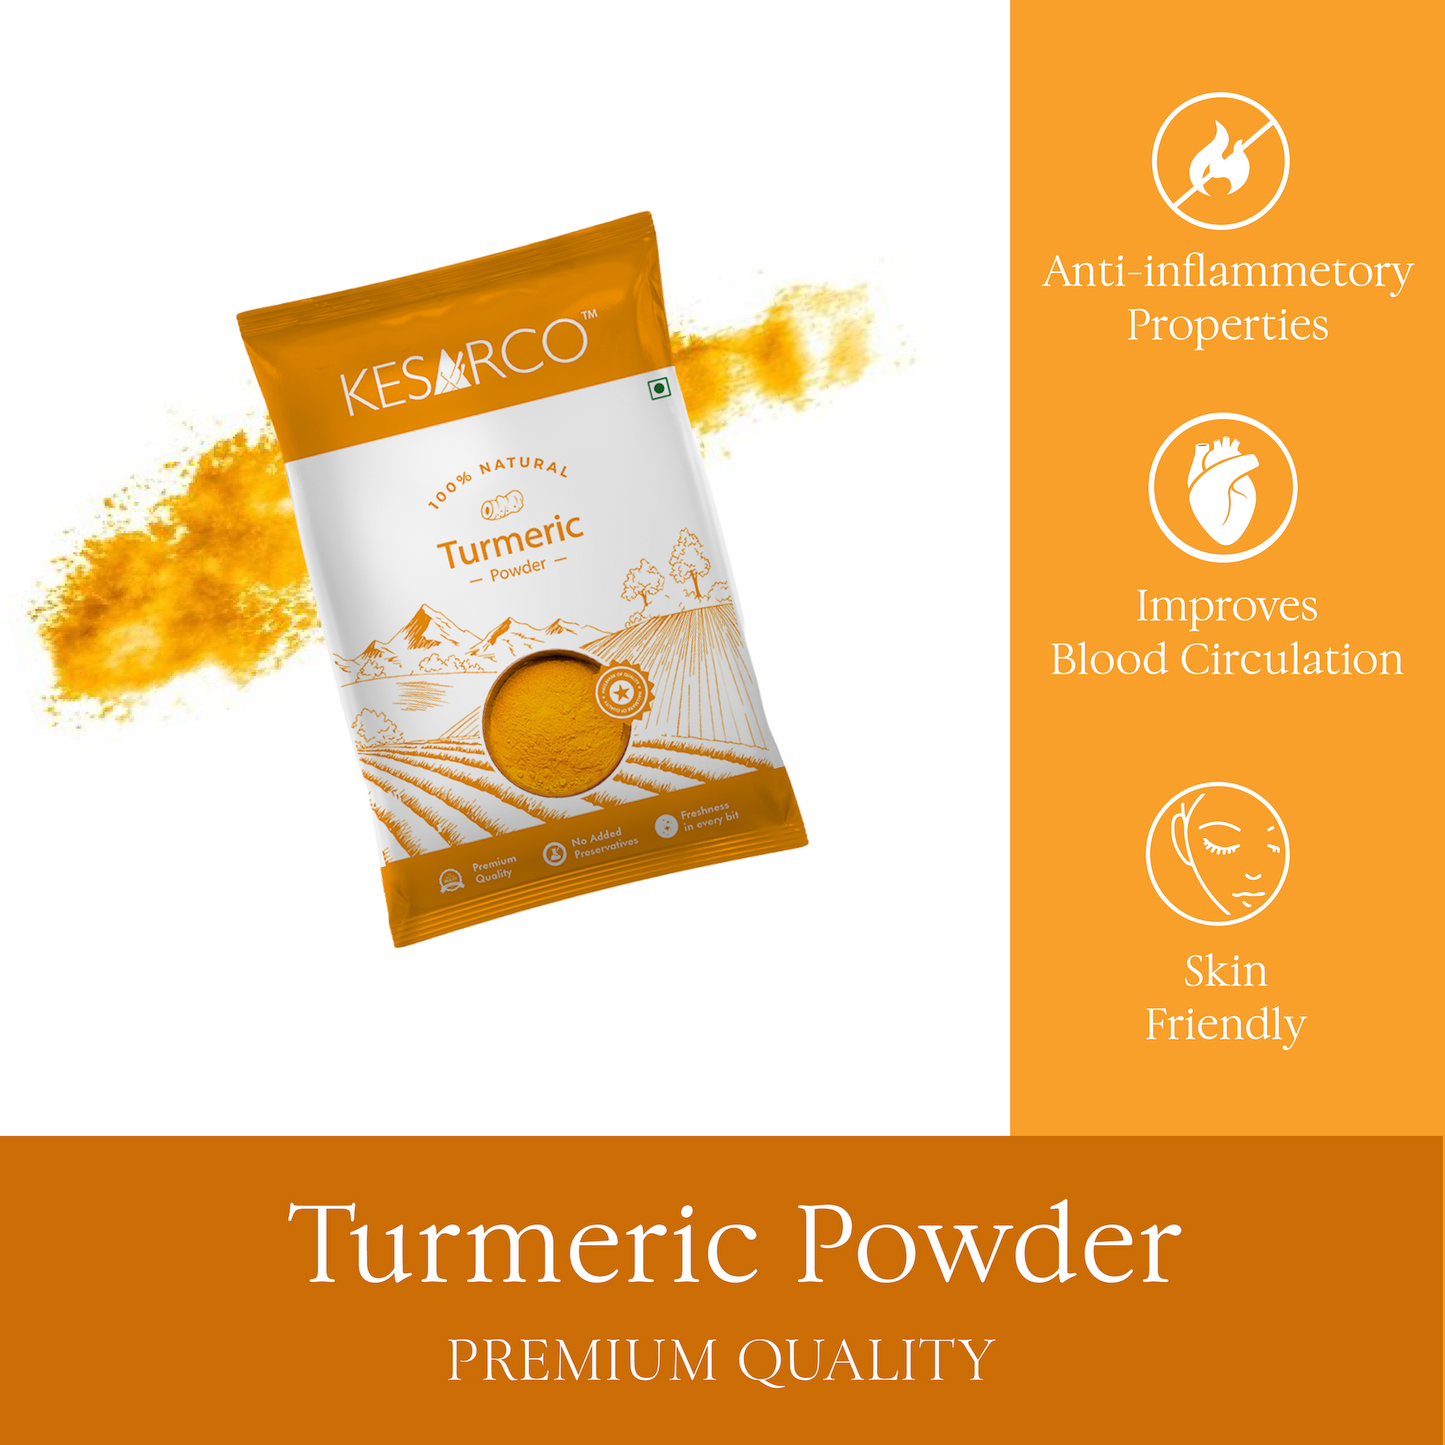 Turmeric Powder, Rich in Curcumin